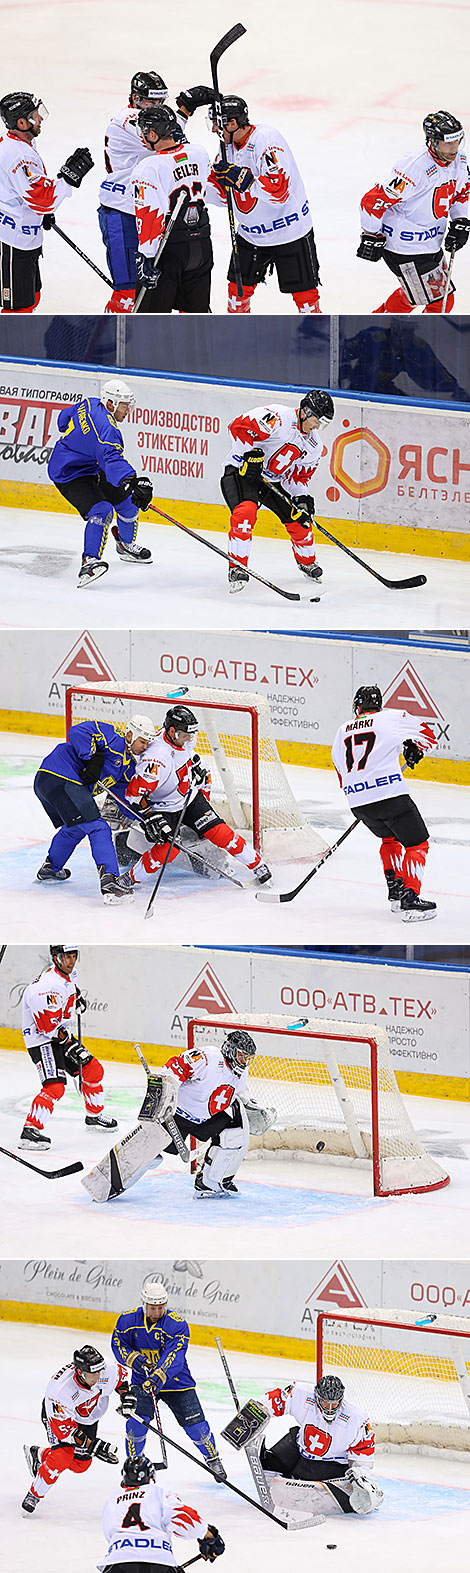 Ukraine win Minsk Christmas Amateur Ice Hockey Tournament opener